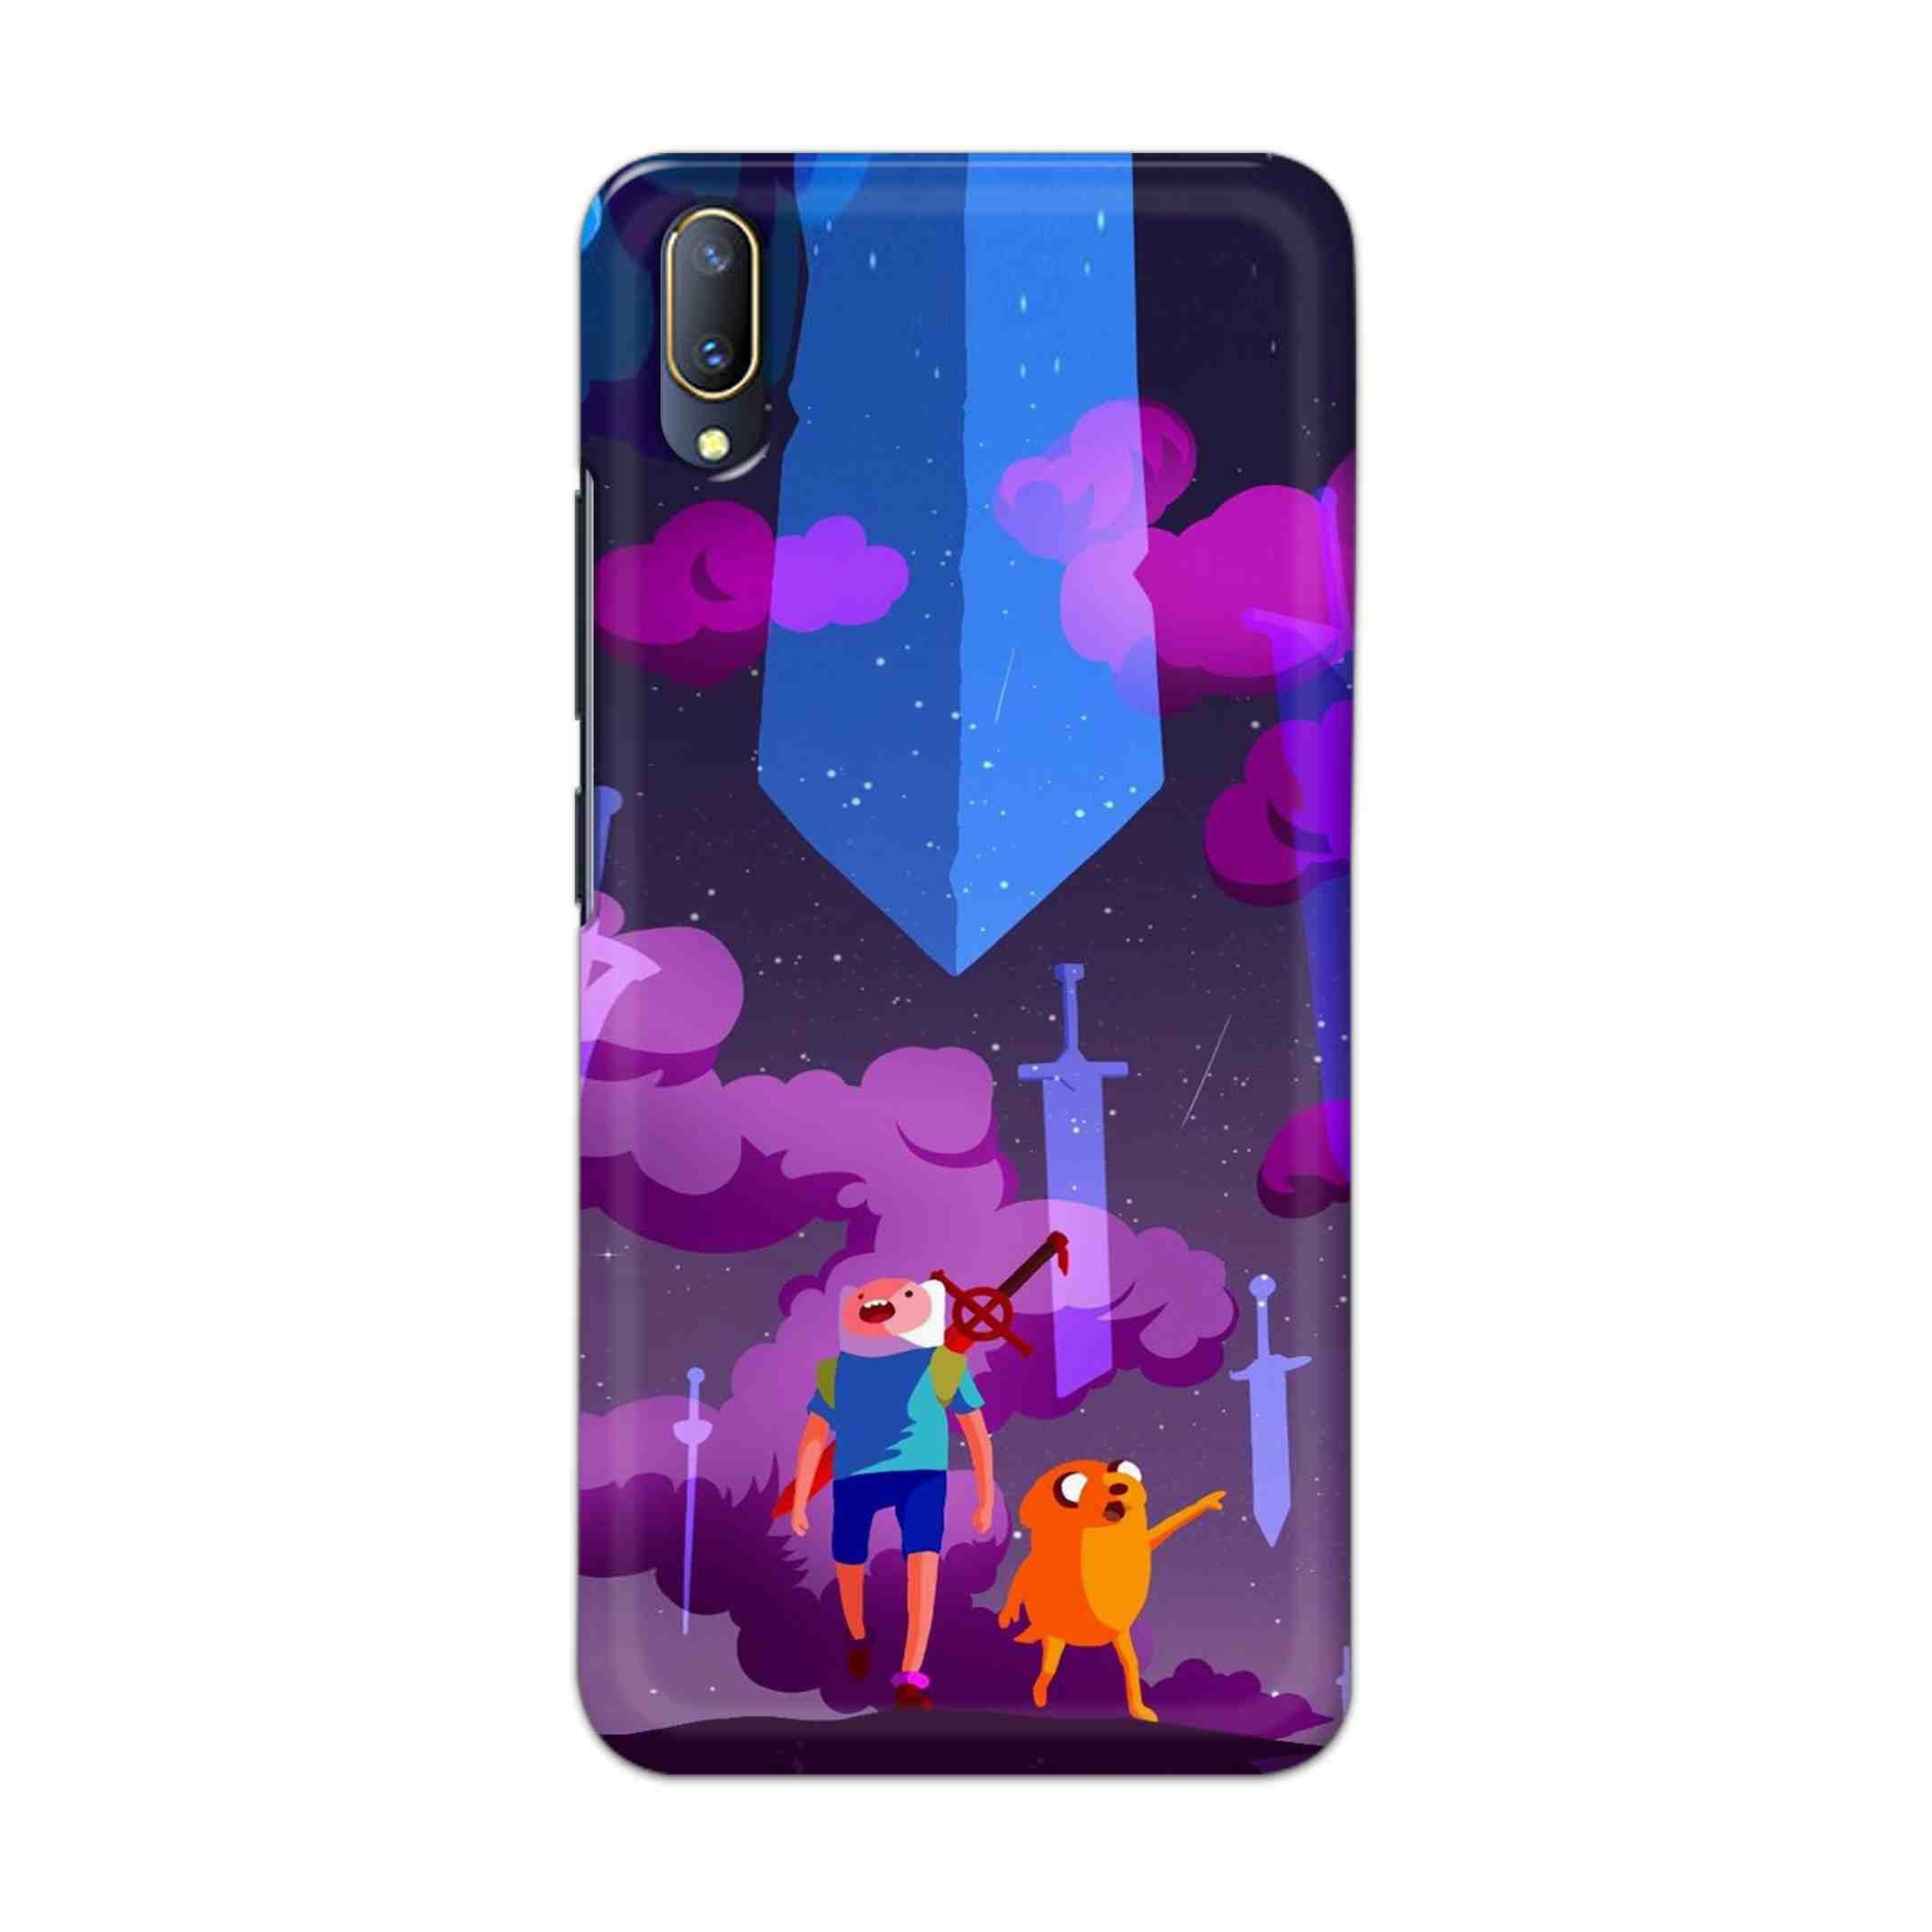 Buy Micky Cartoon Hard Back Mobile Phone Case Cover For V11 PRO Online